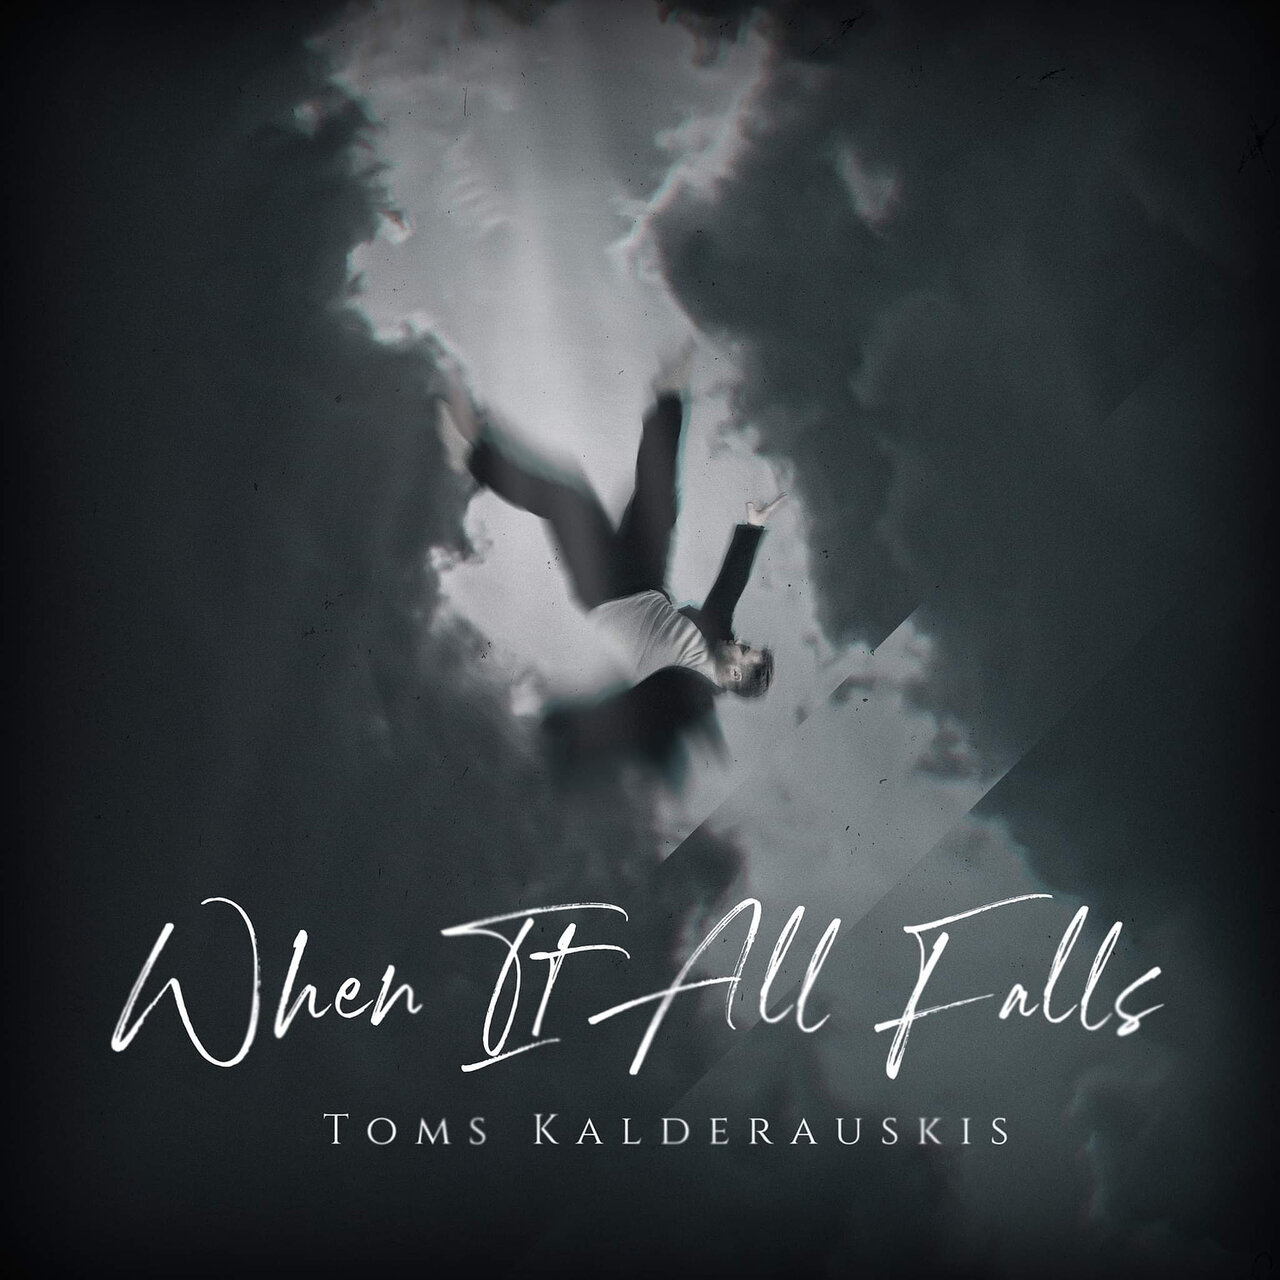 Toms Kalderauskis When It All Falls cover artwork